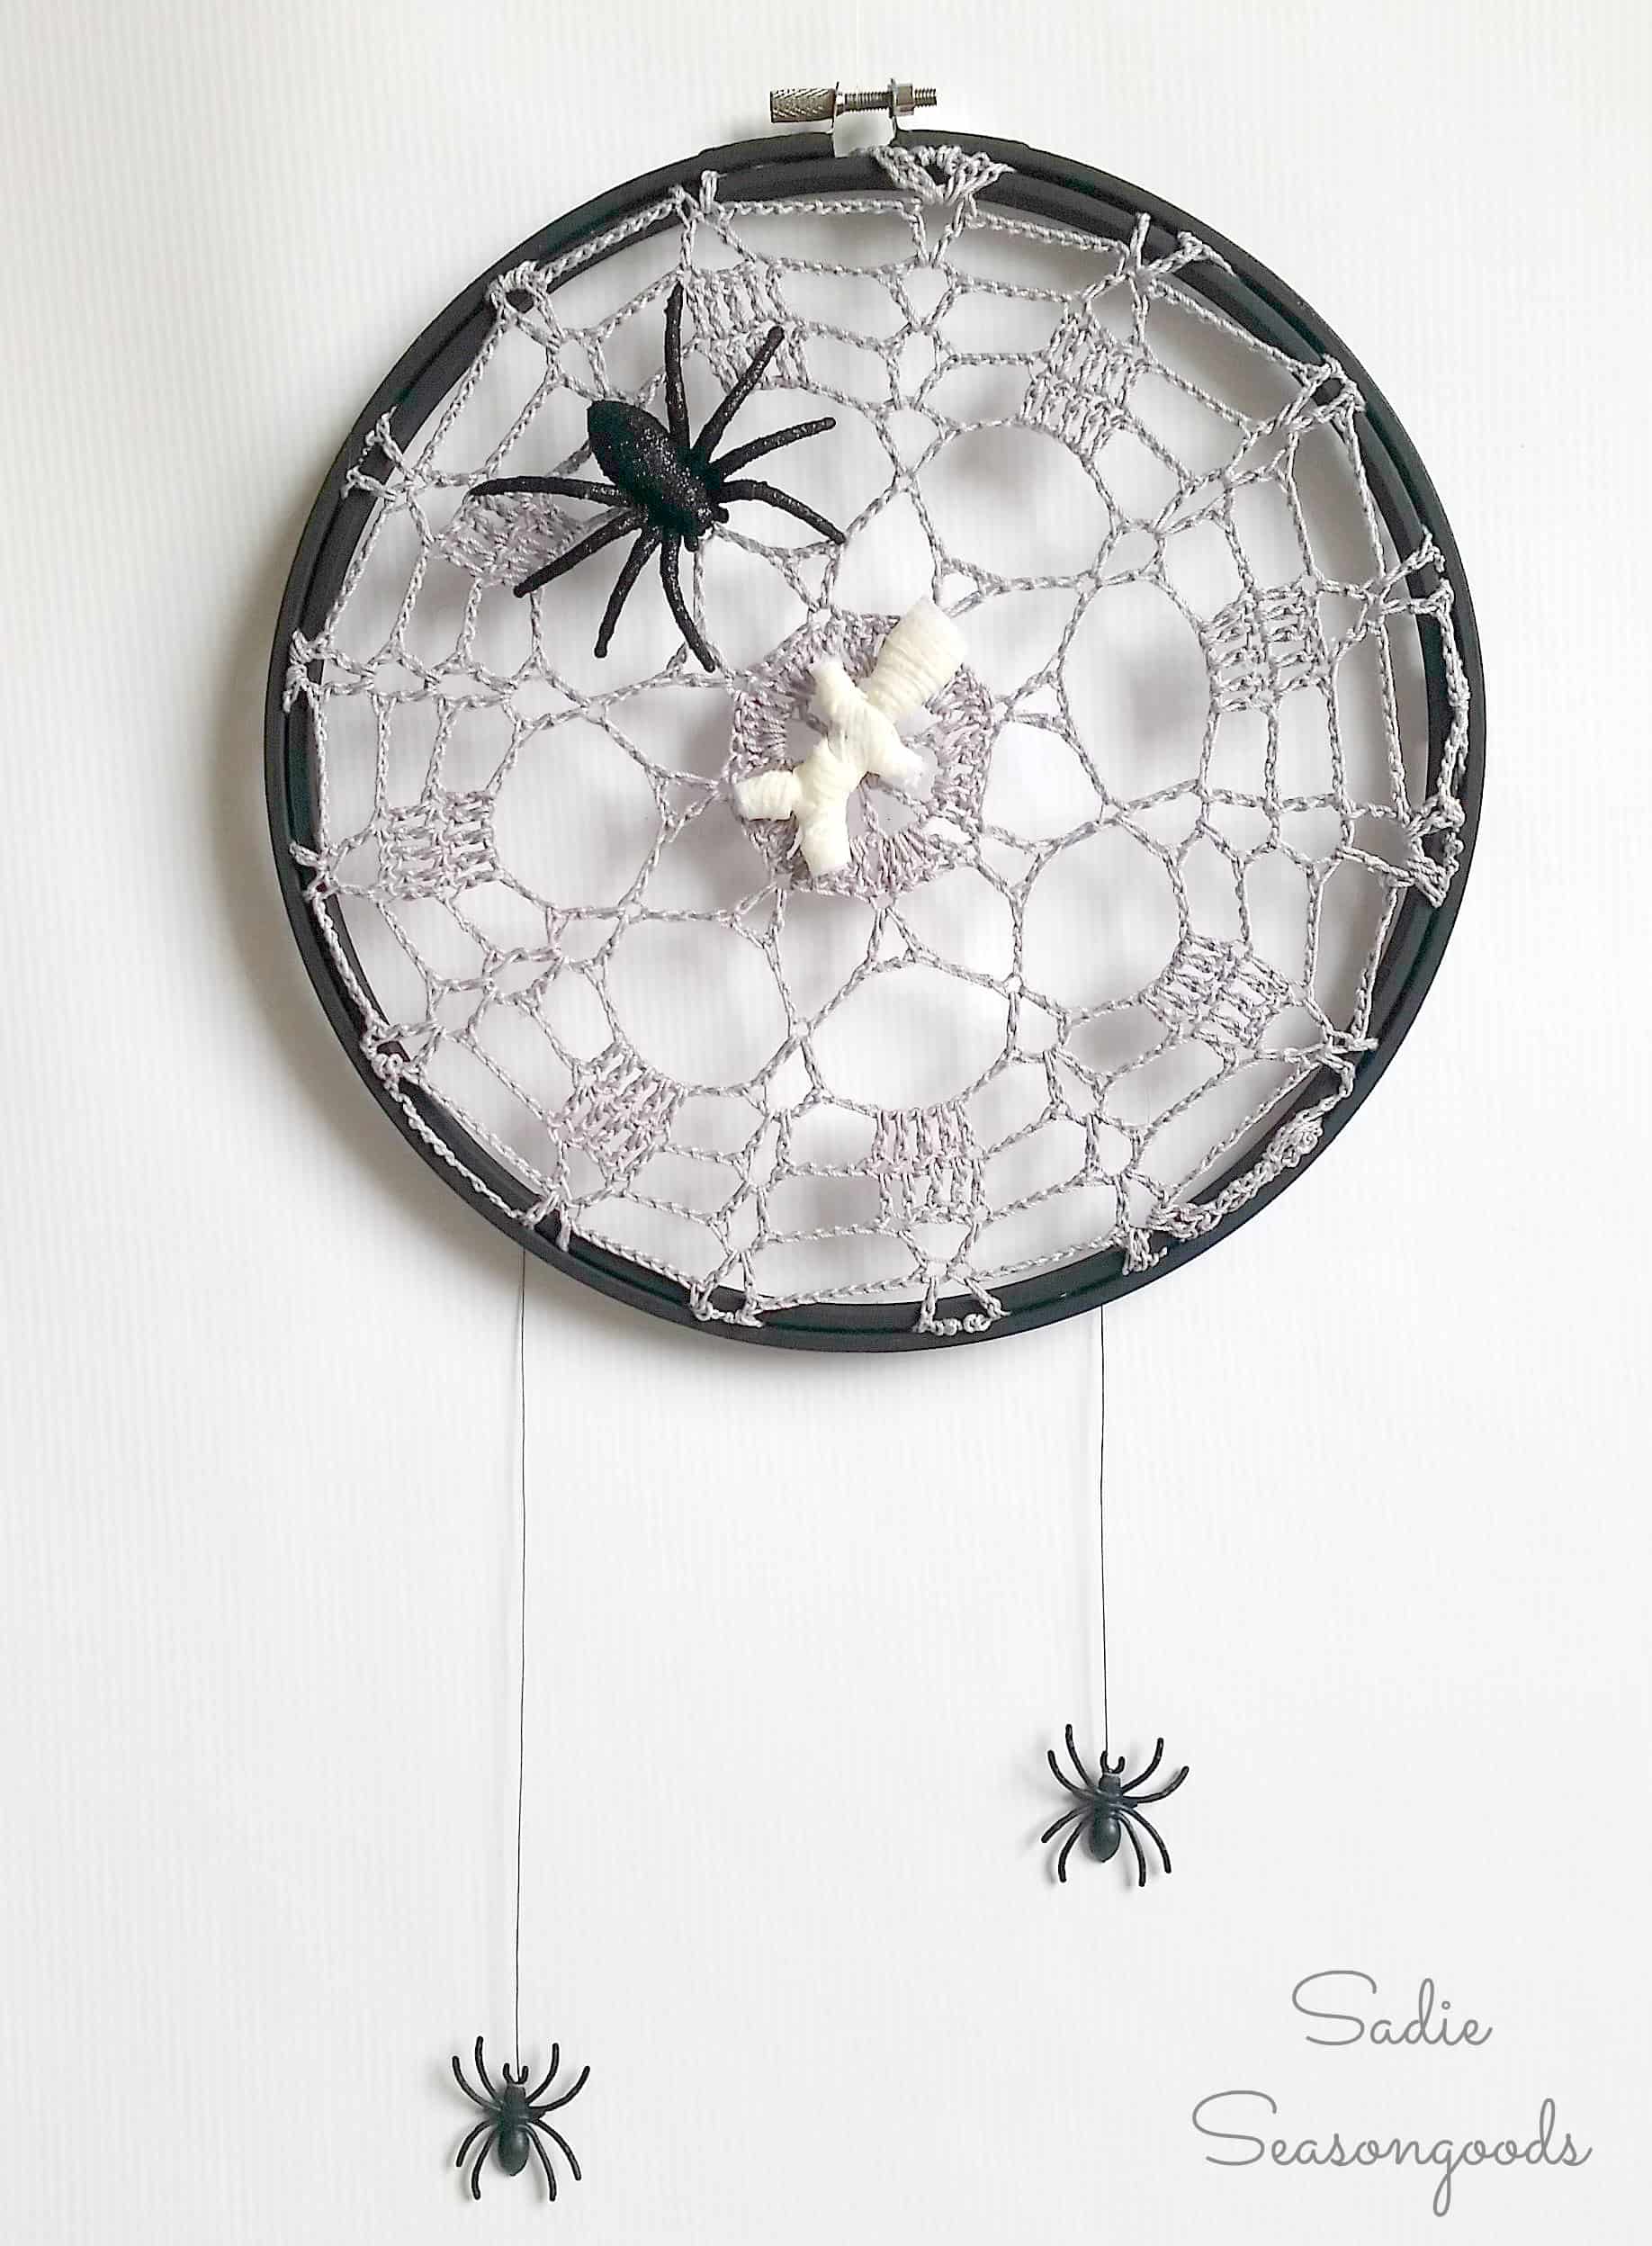 5 repurposed vintage crocheted doilies in embroidery hoops as spider web for Halloween decor Sadie Seasongoods